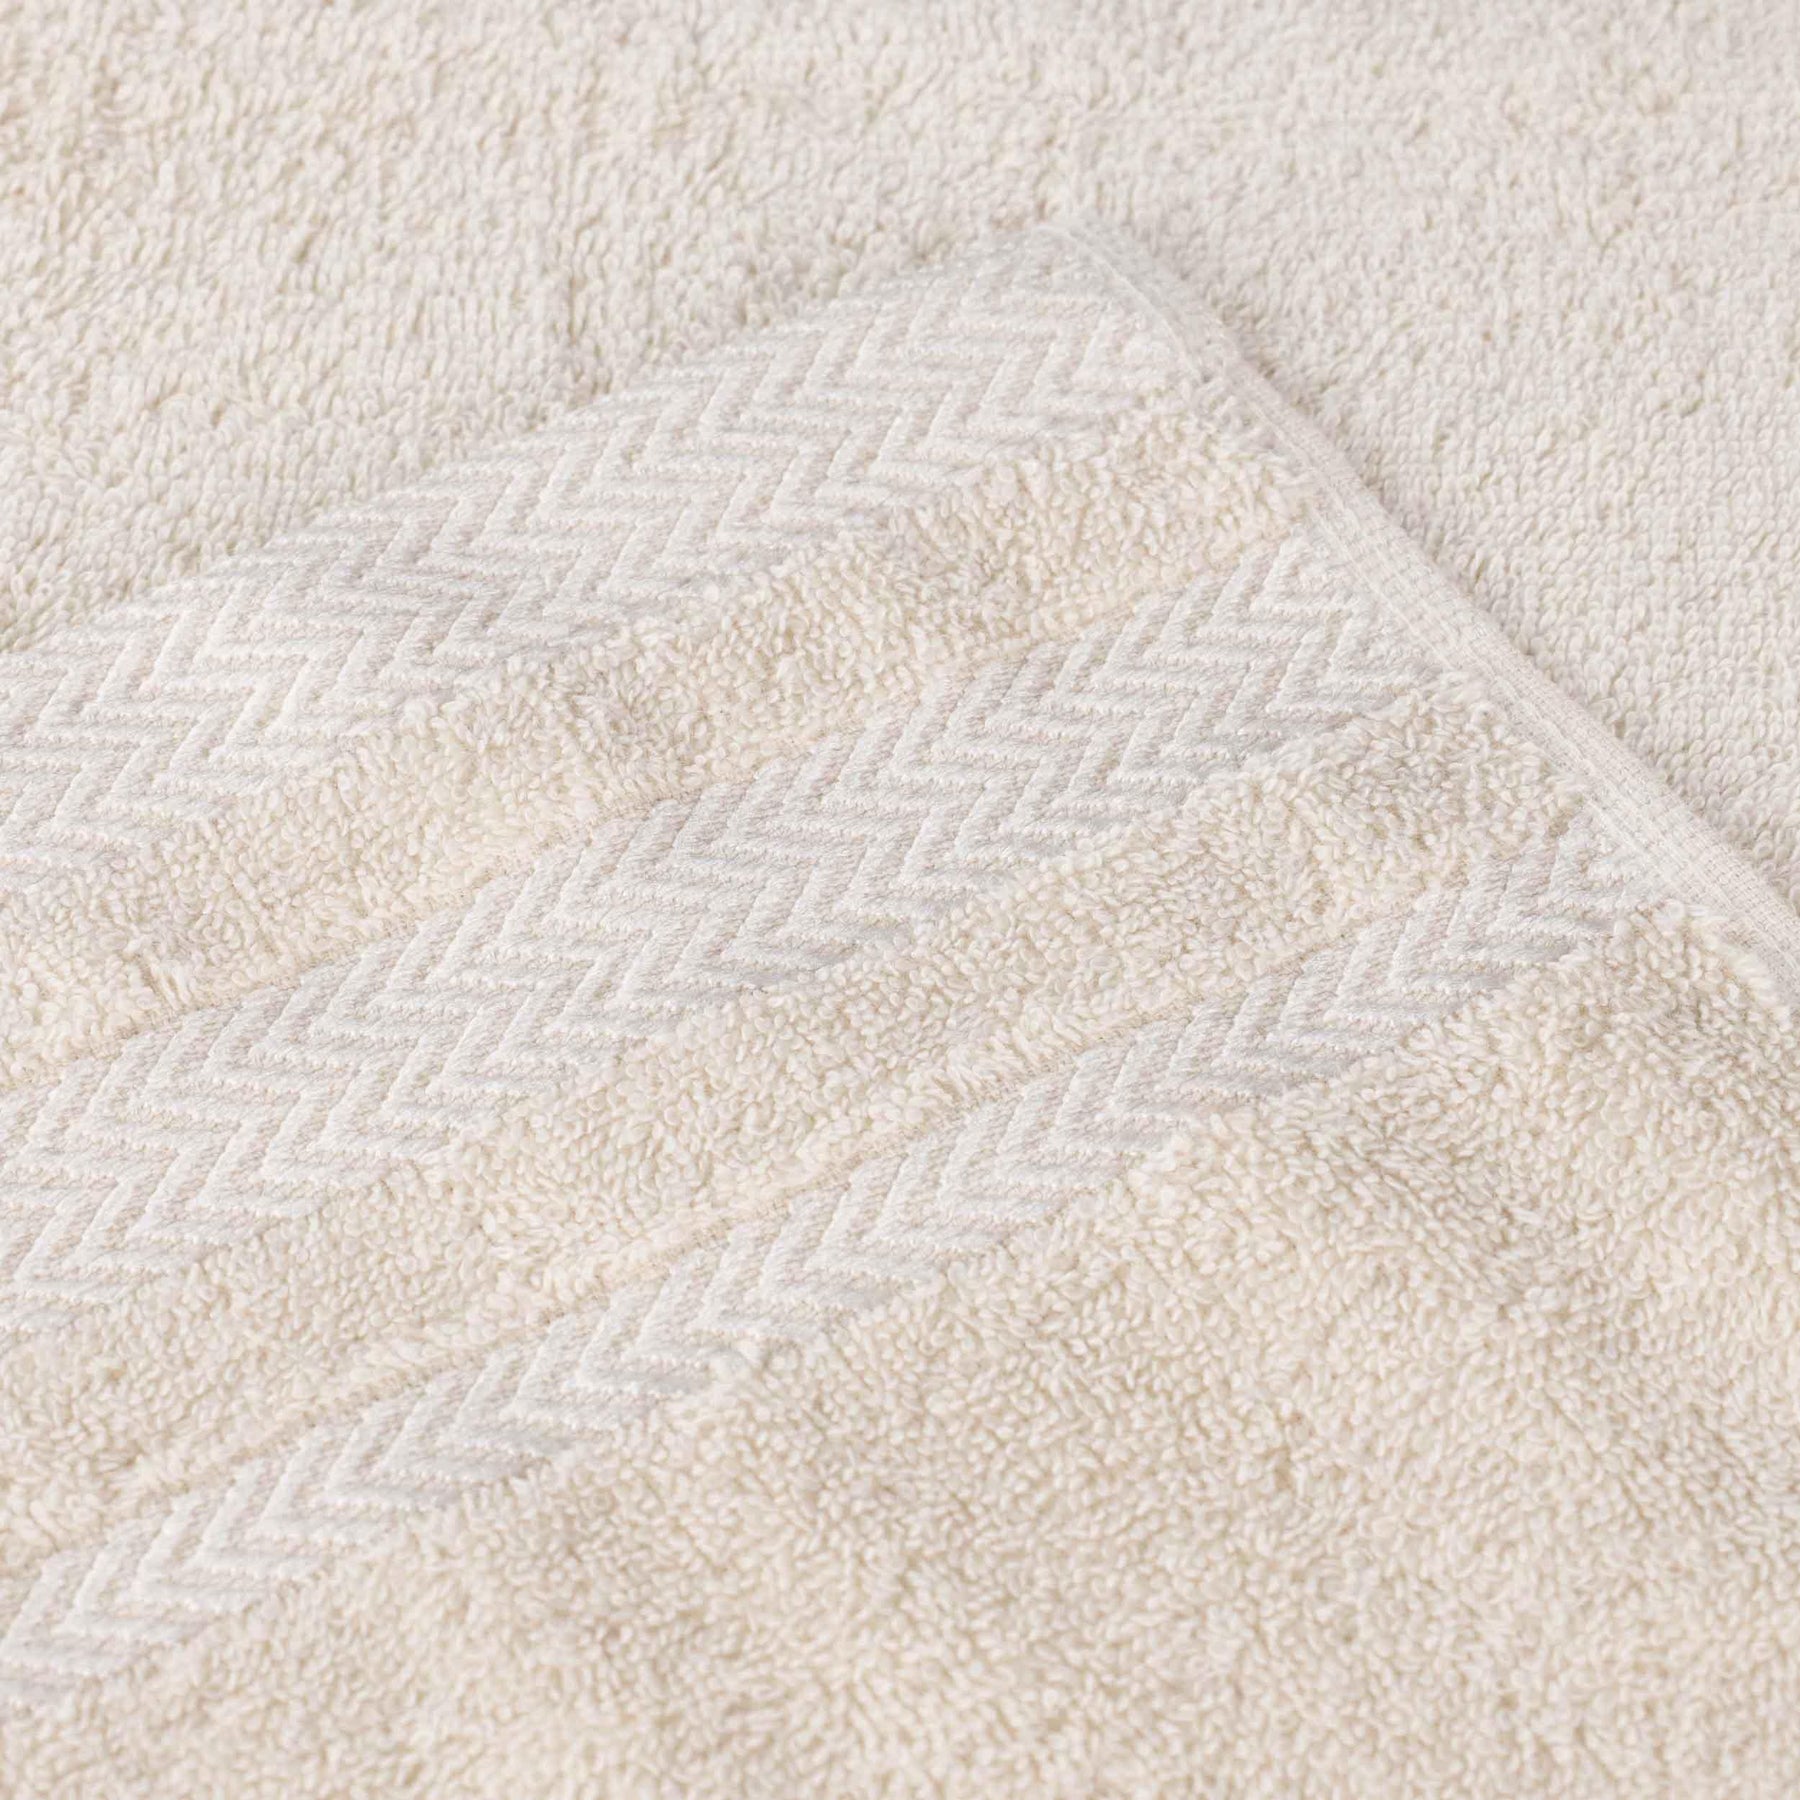 Hays Cotton Medium Weight 3 Piece Assorted Bathroom Towel Set - Towel Set by Superior - Superior 